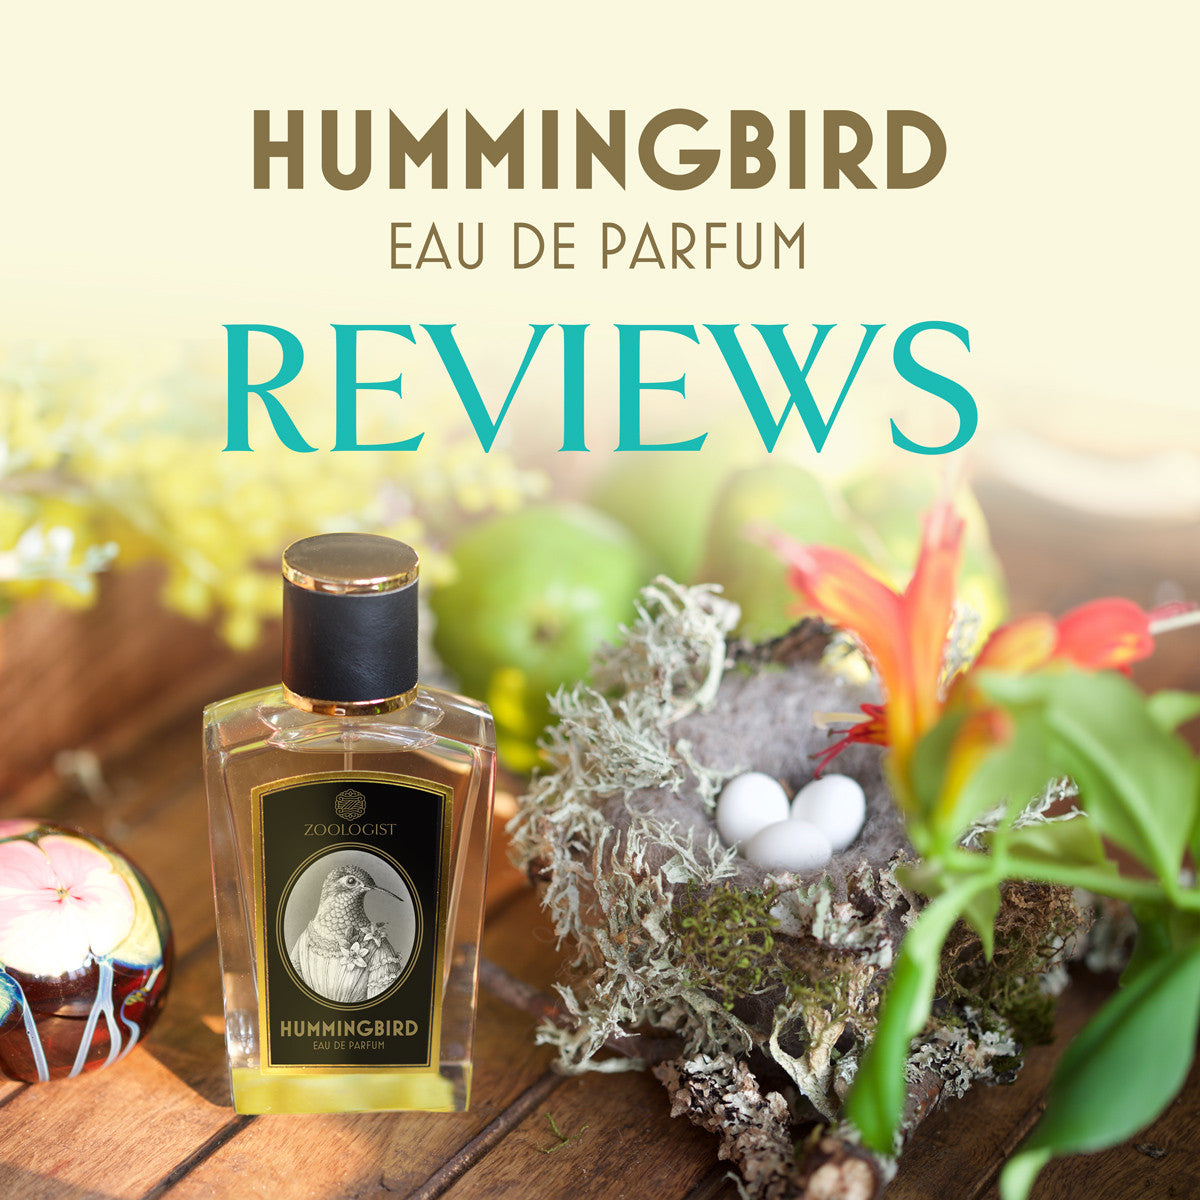 Zoologist Hummingbird Reviews Roundup